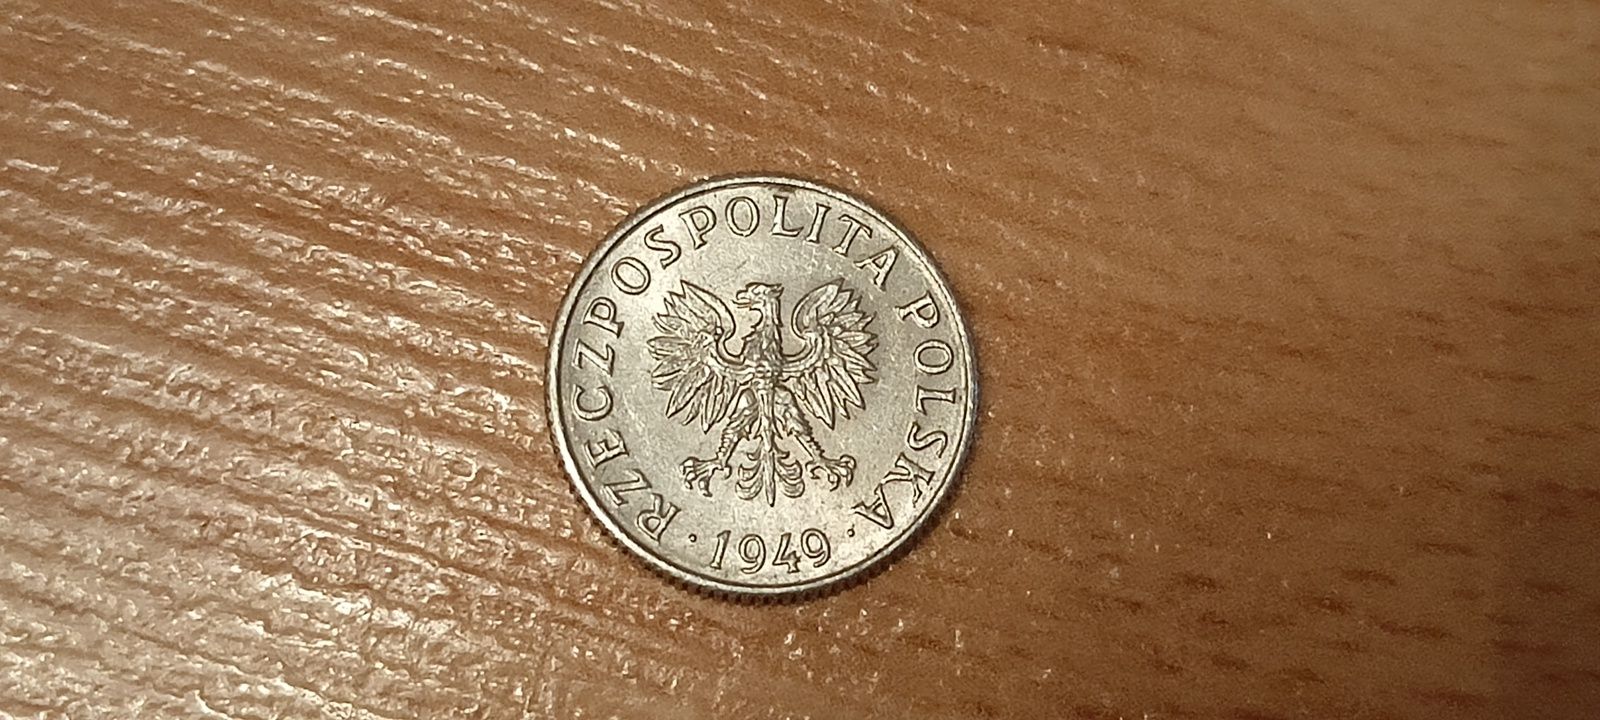 Moneta 1 grosz z roku 1949